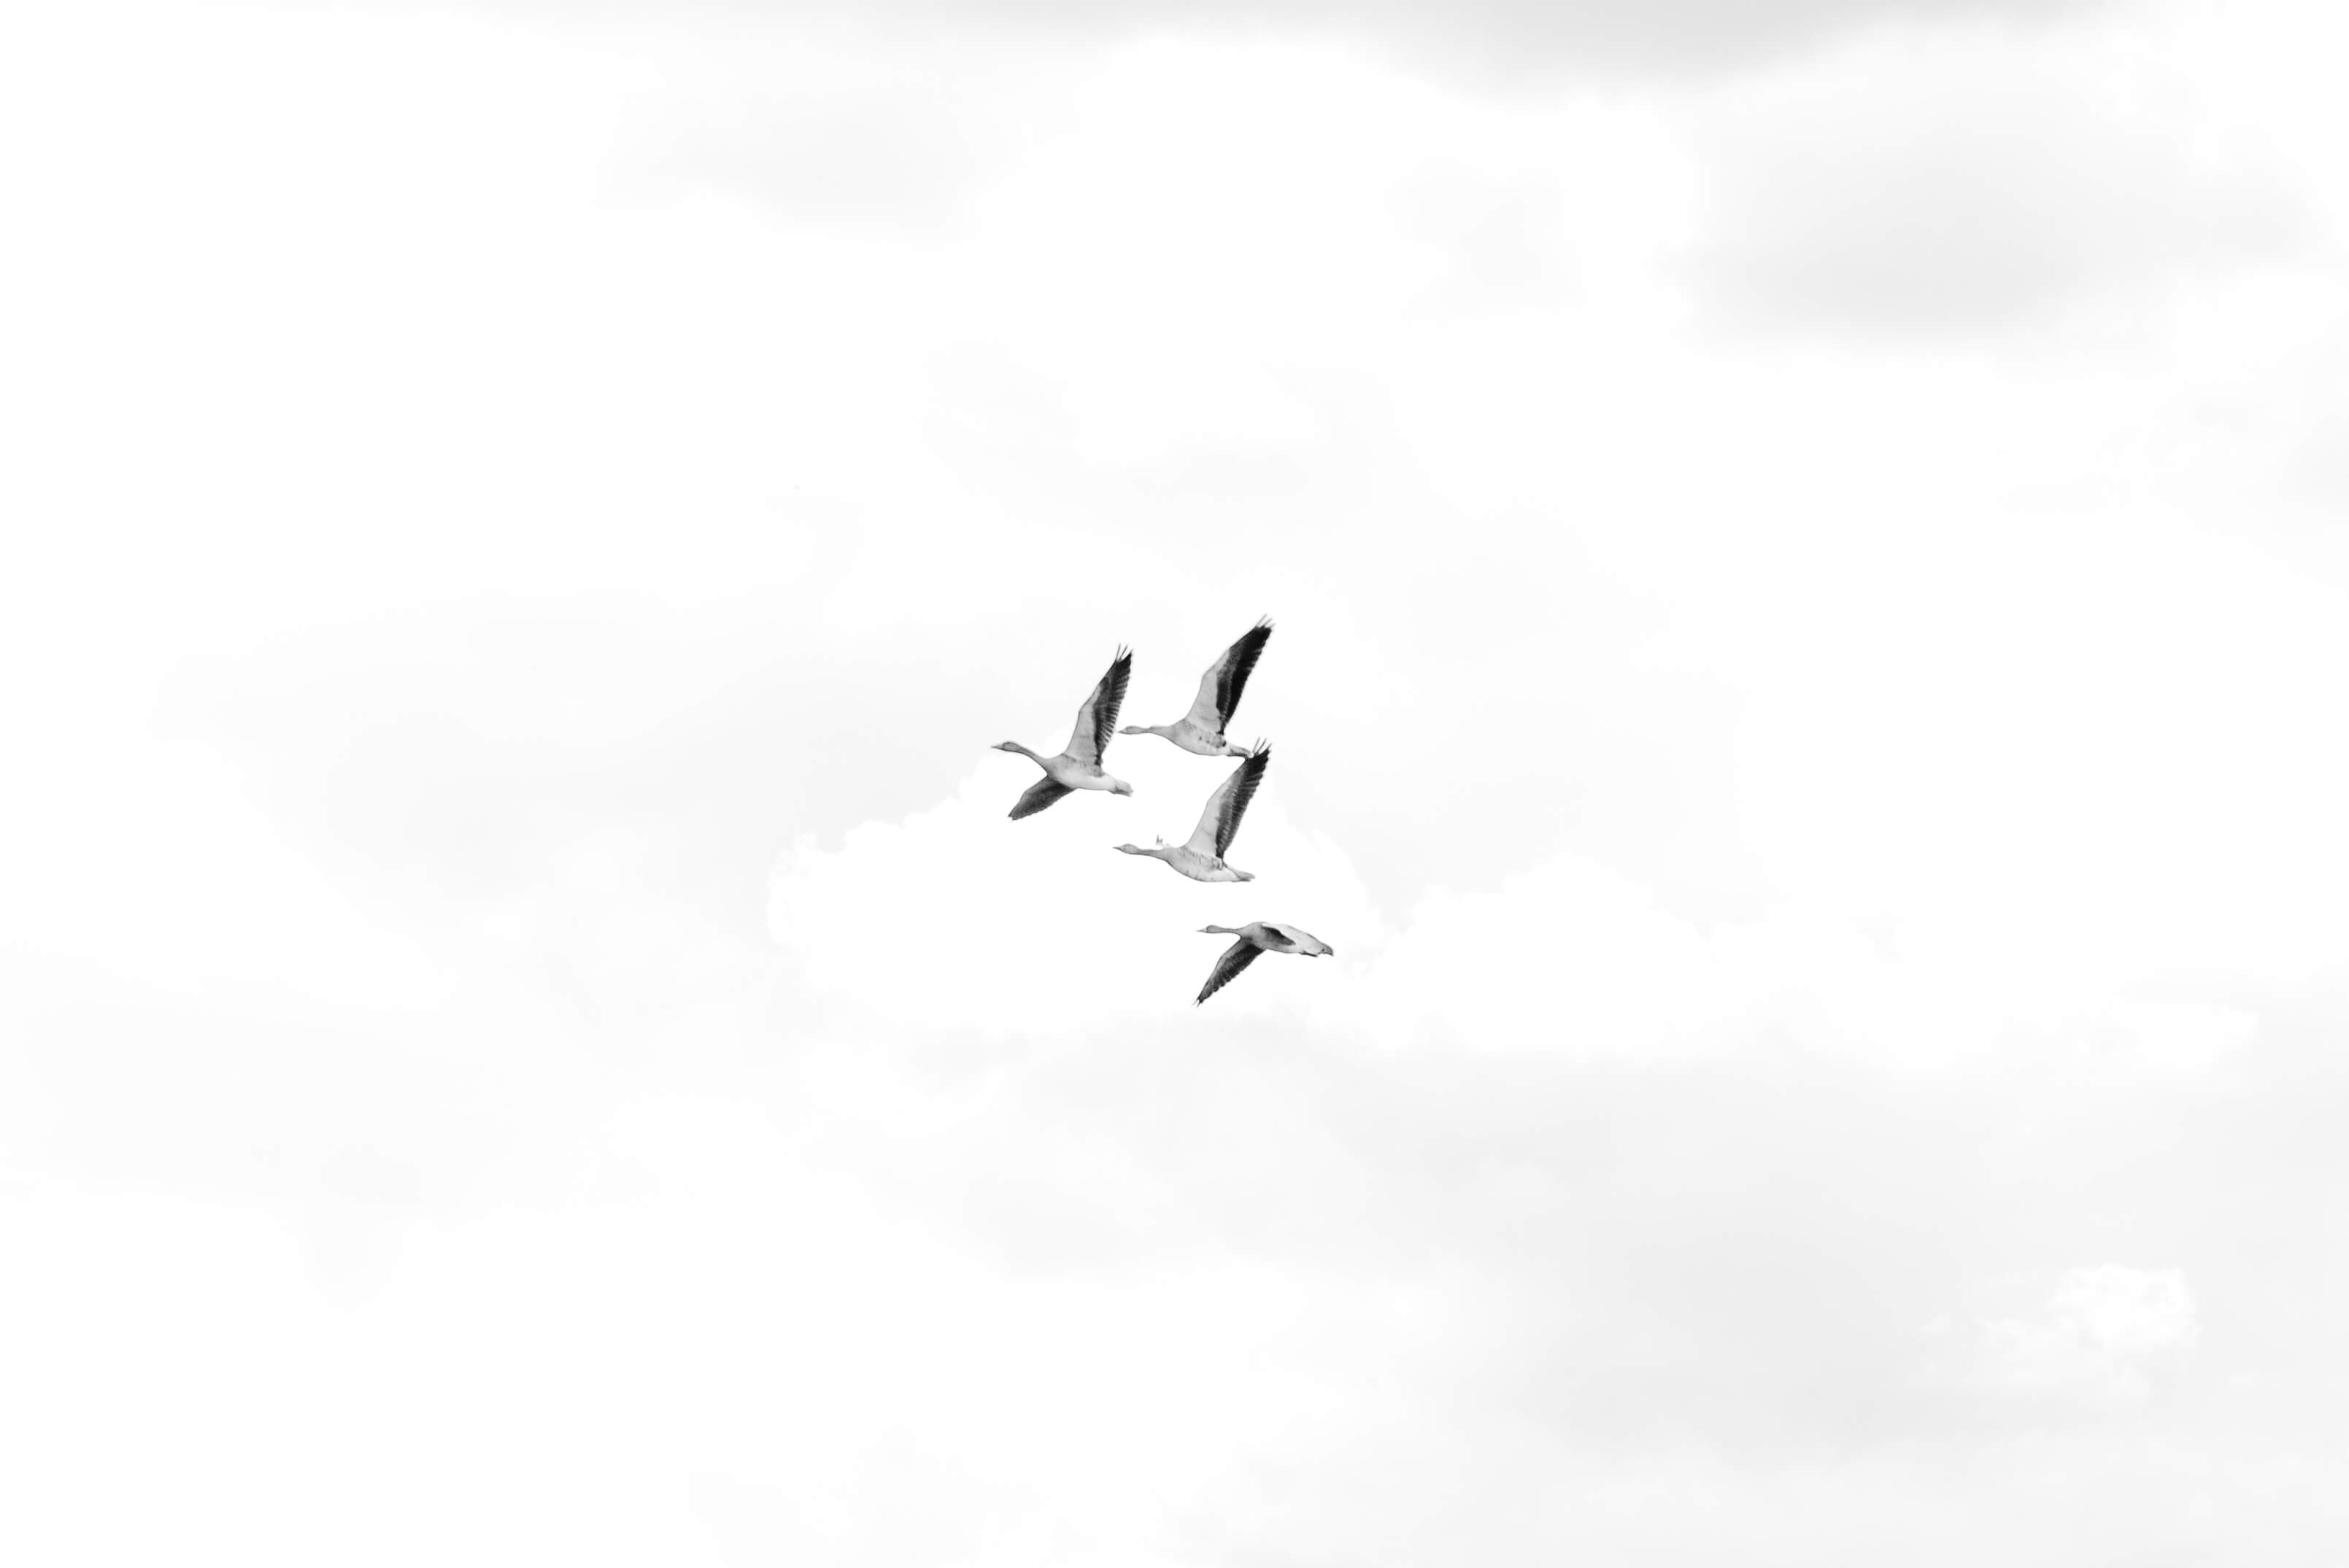 A flock of birds flying across the sky